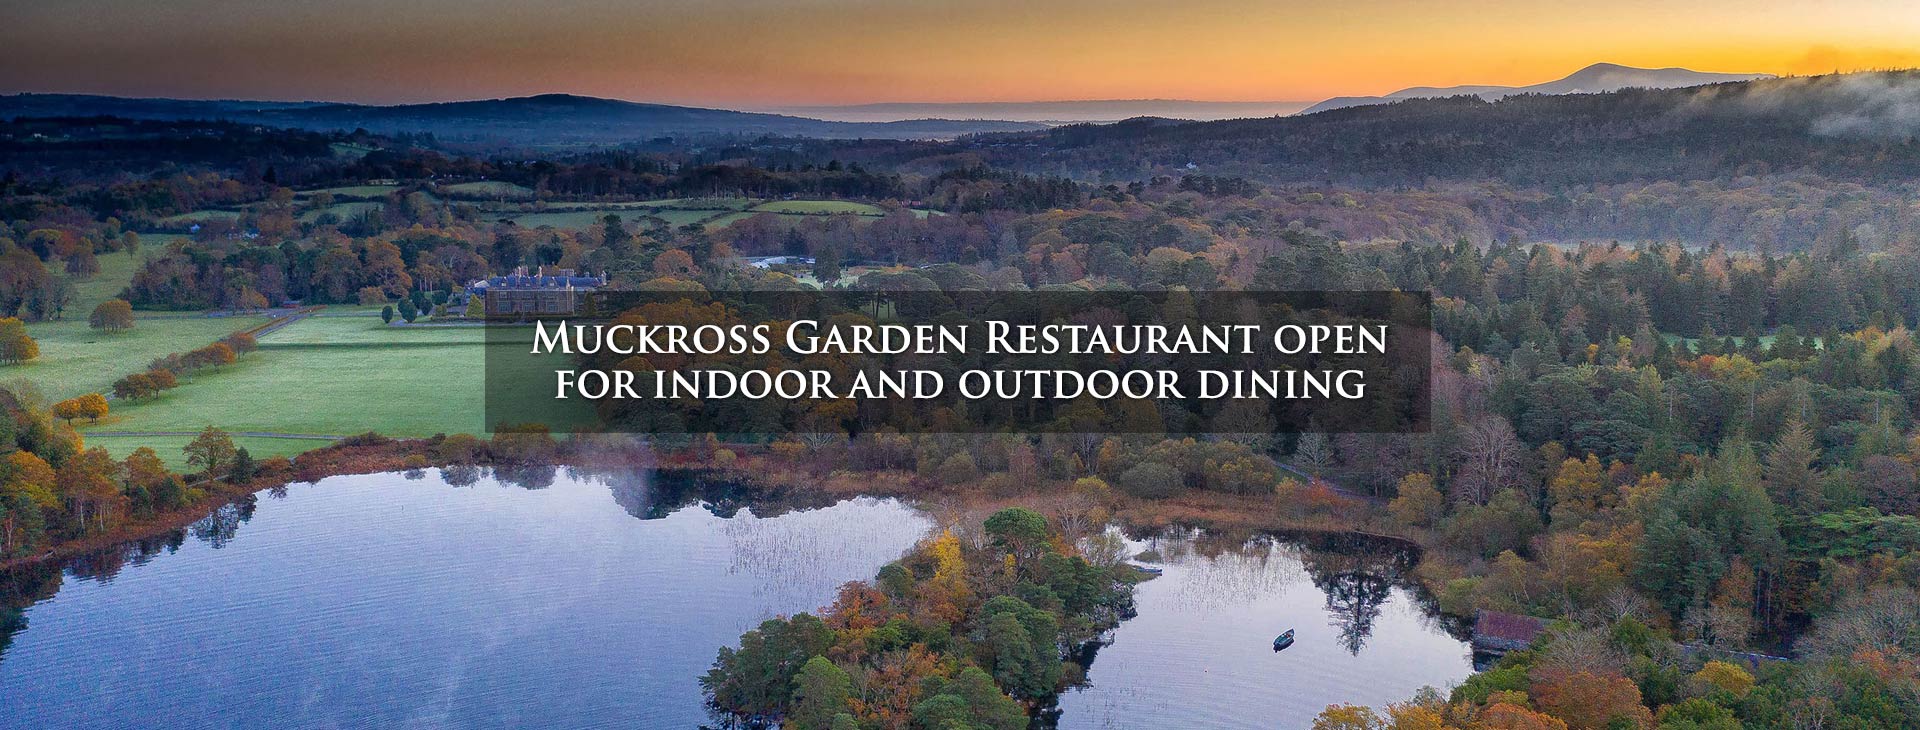 muckross garden restaurant